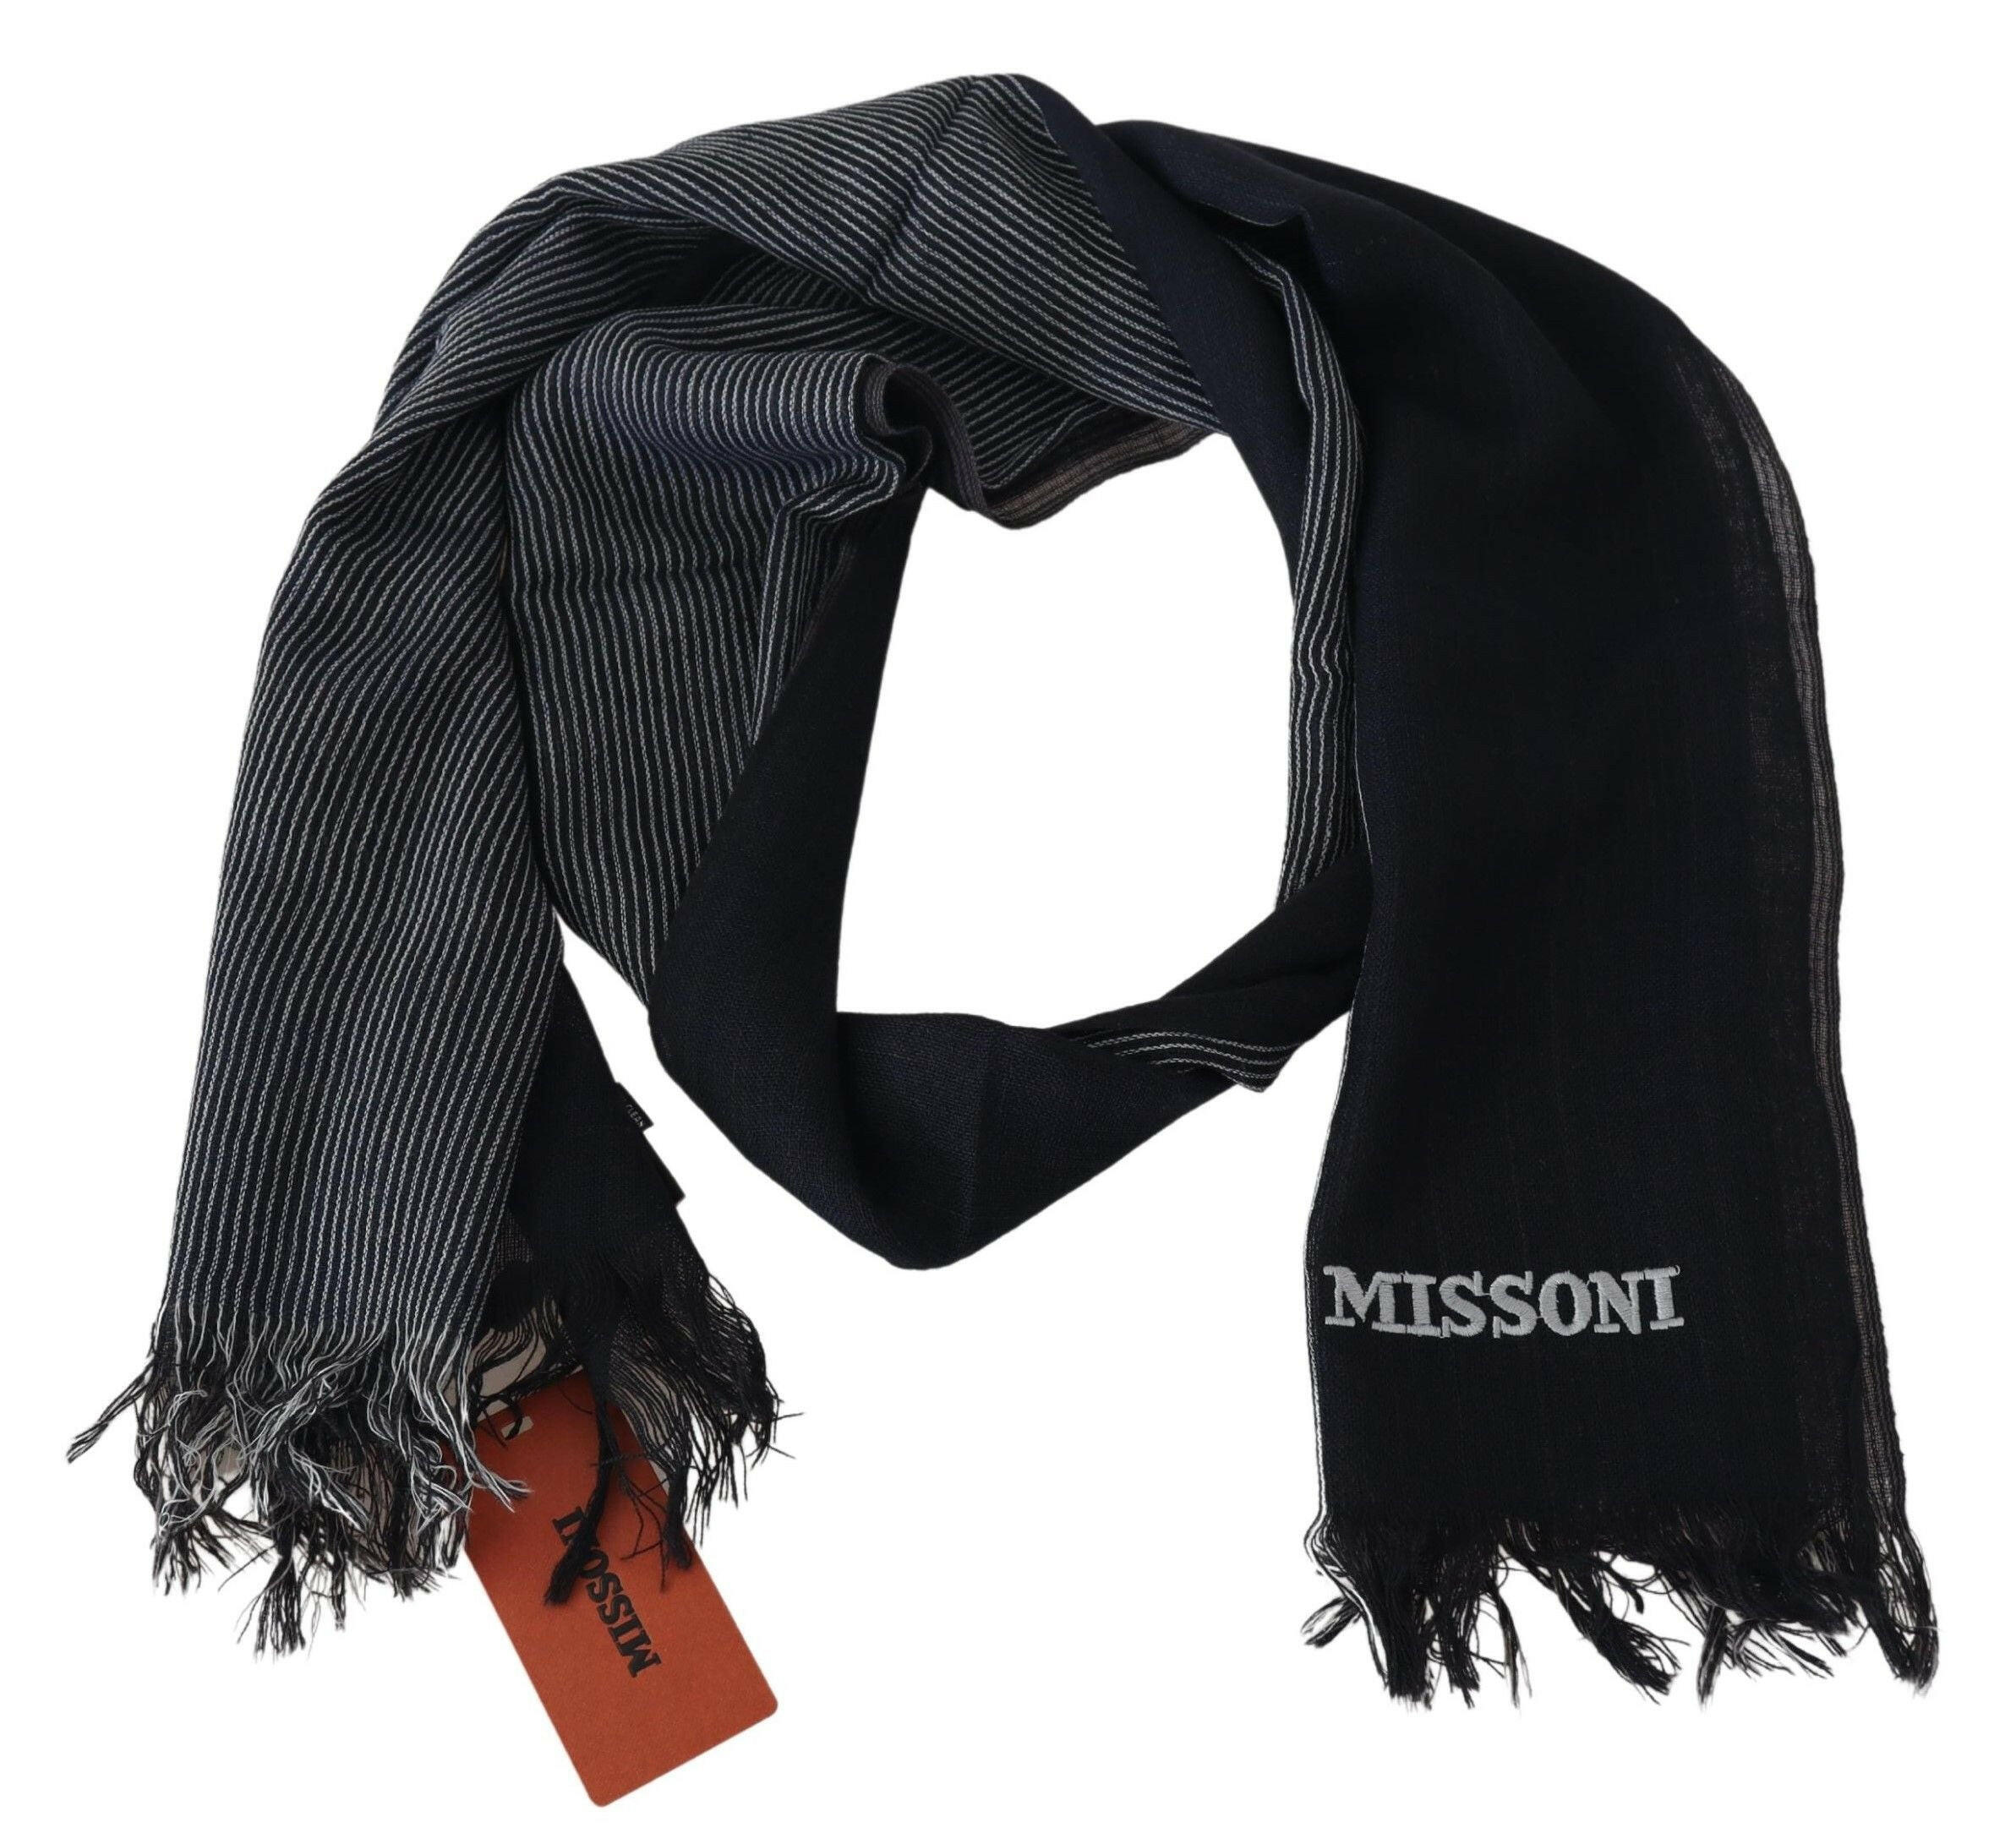 Missoni Black Striped Wool Unisex Neck Wrap Scarf - GENUINE AUTHENTIC BRAND LLC  